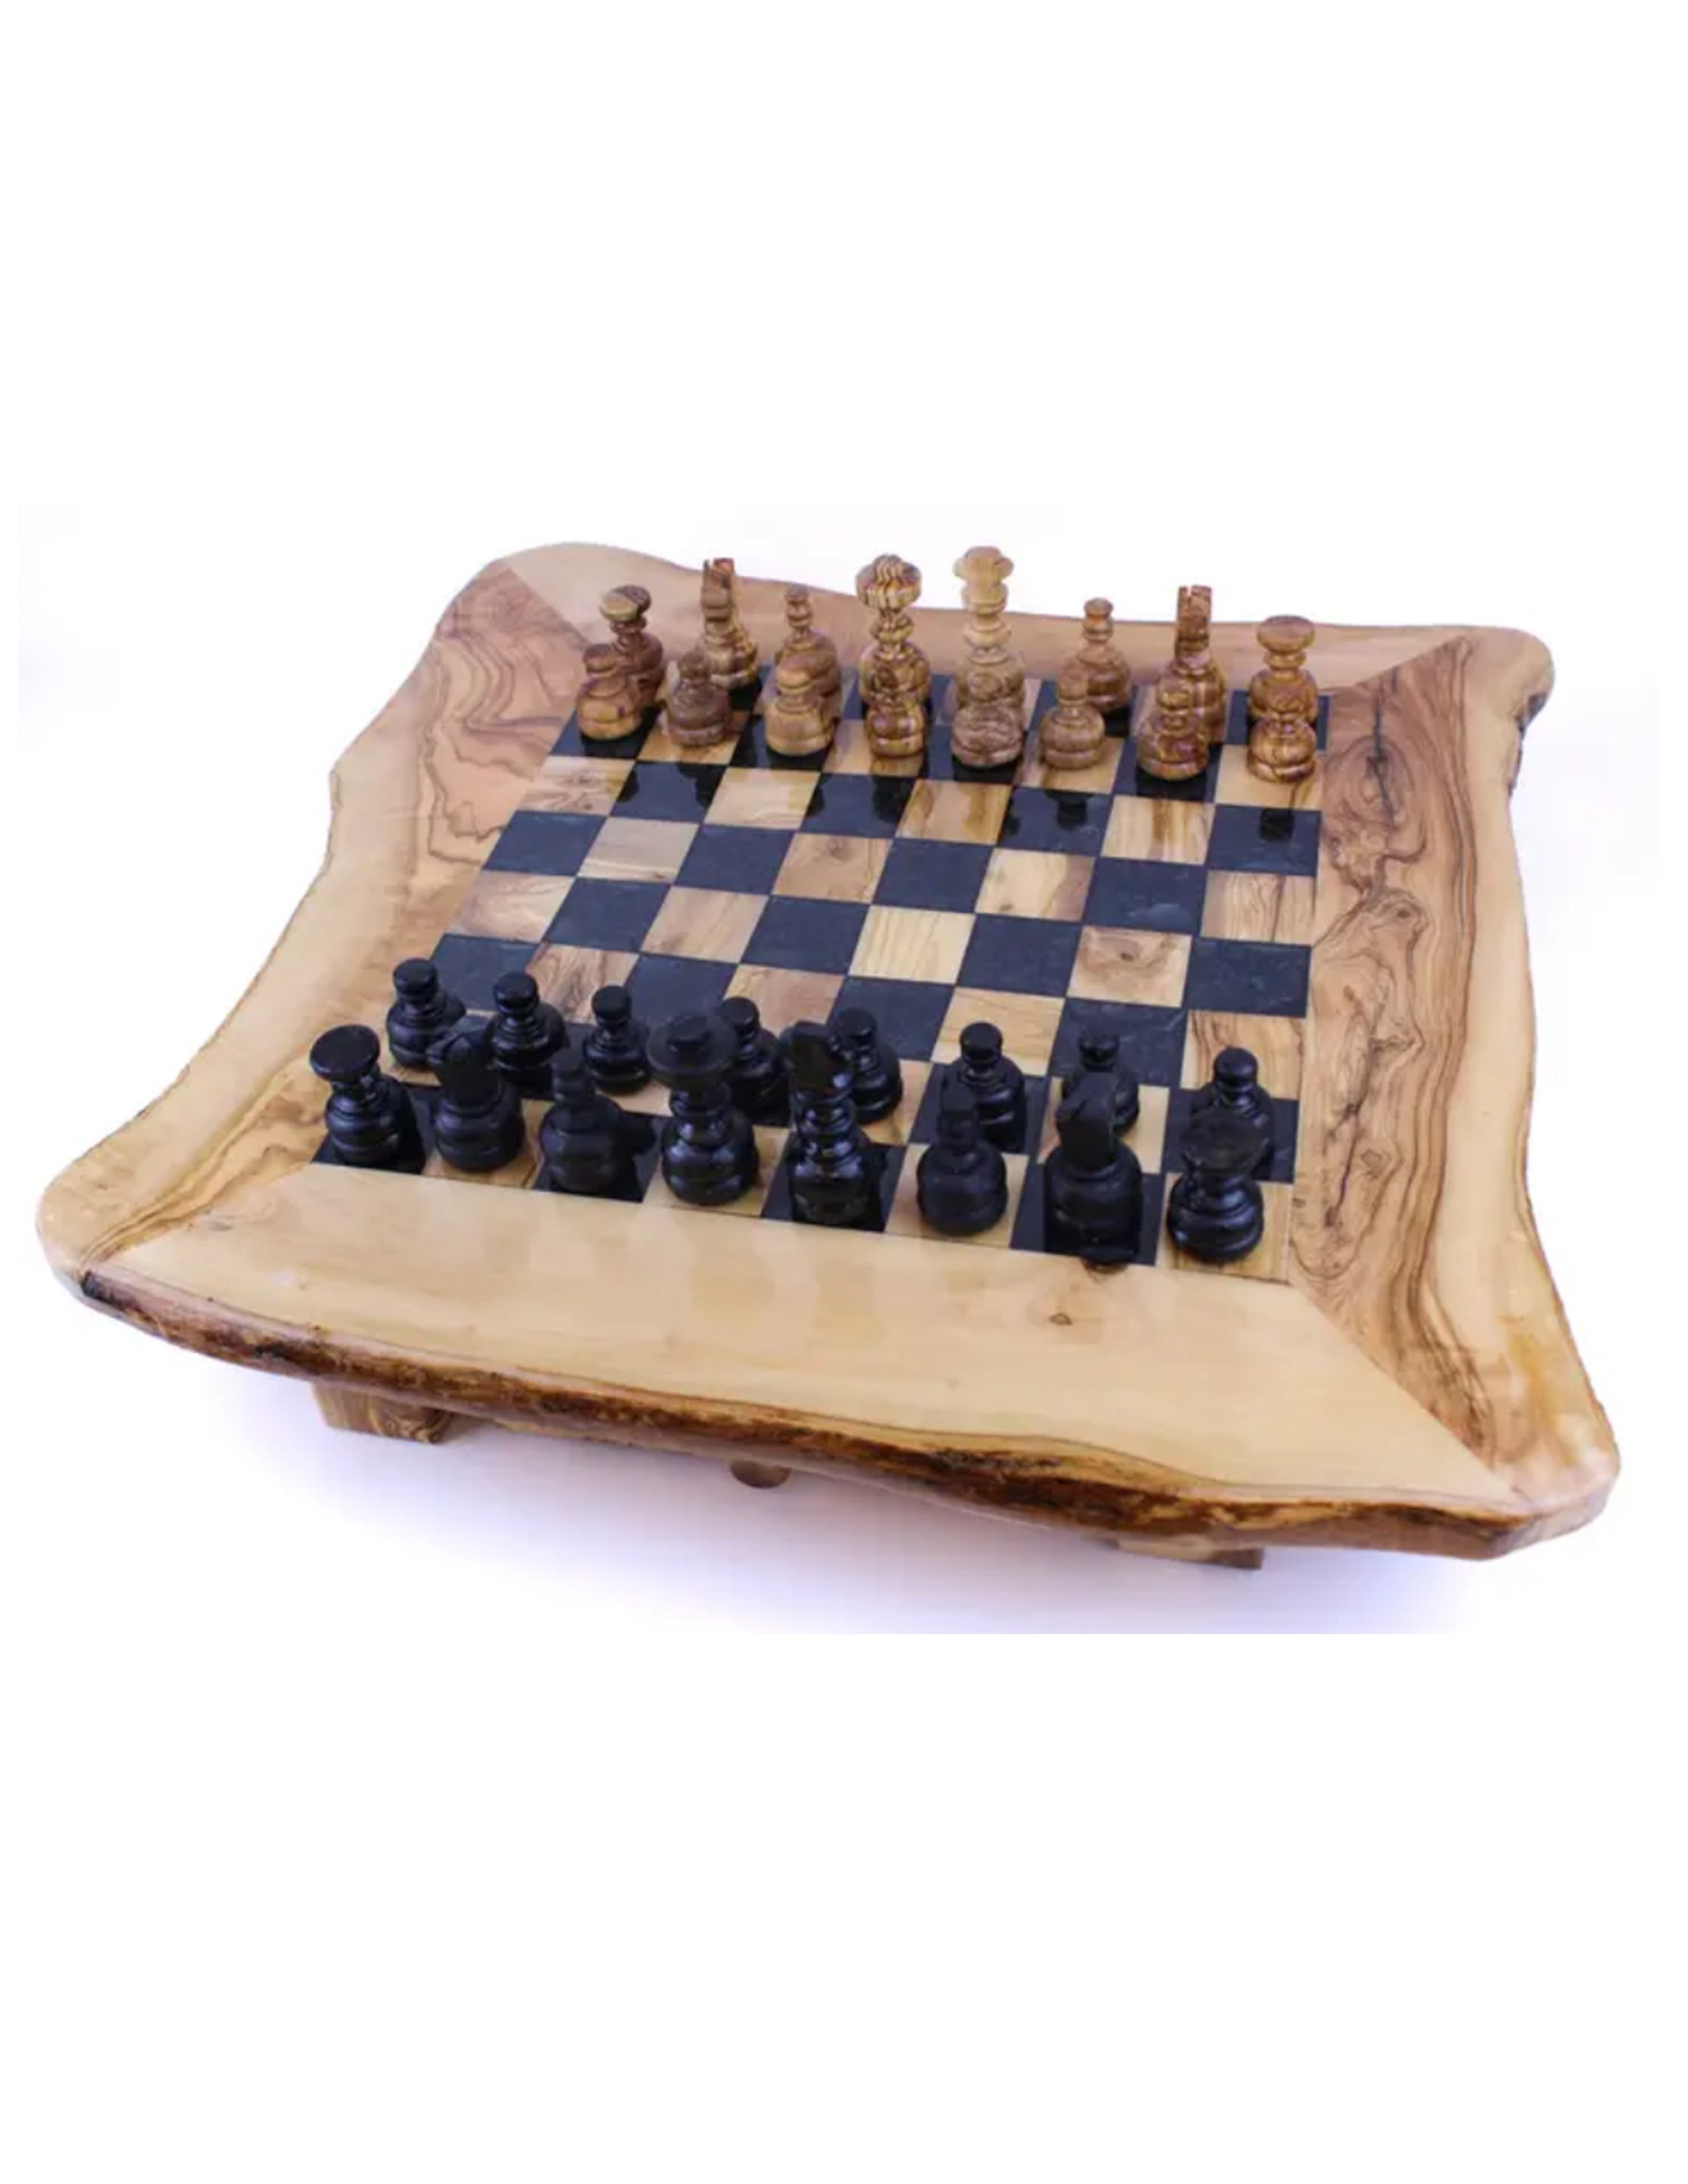 Jack Daniel's Chess Set | NashvilleSouvenirs.com